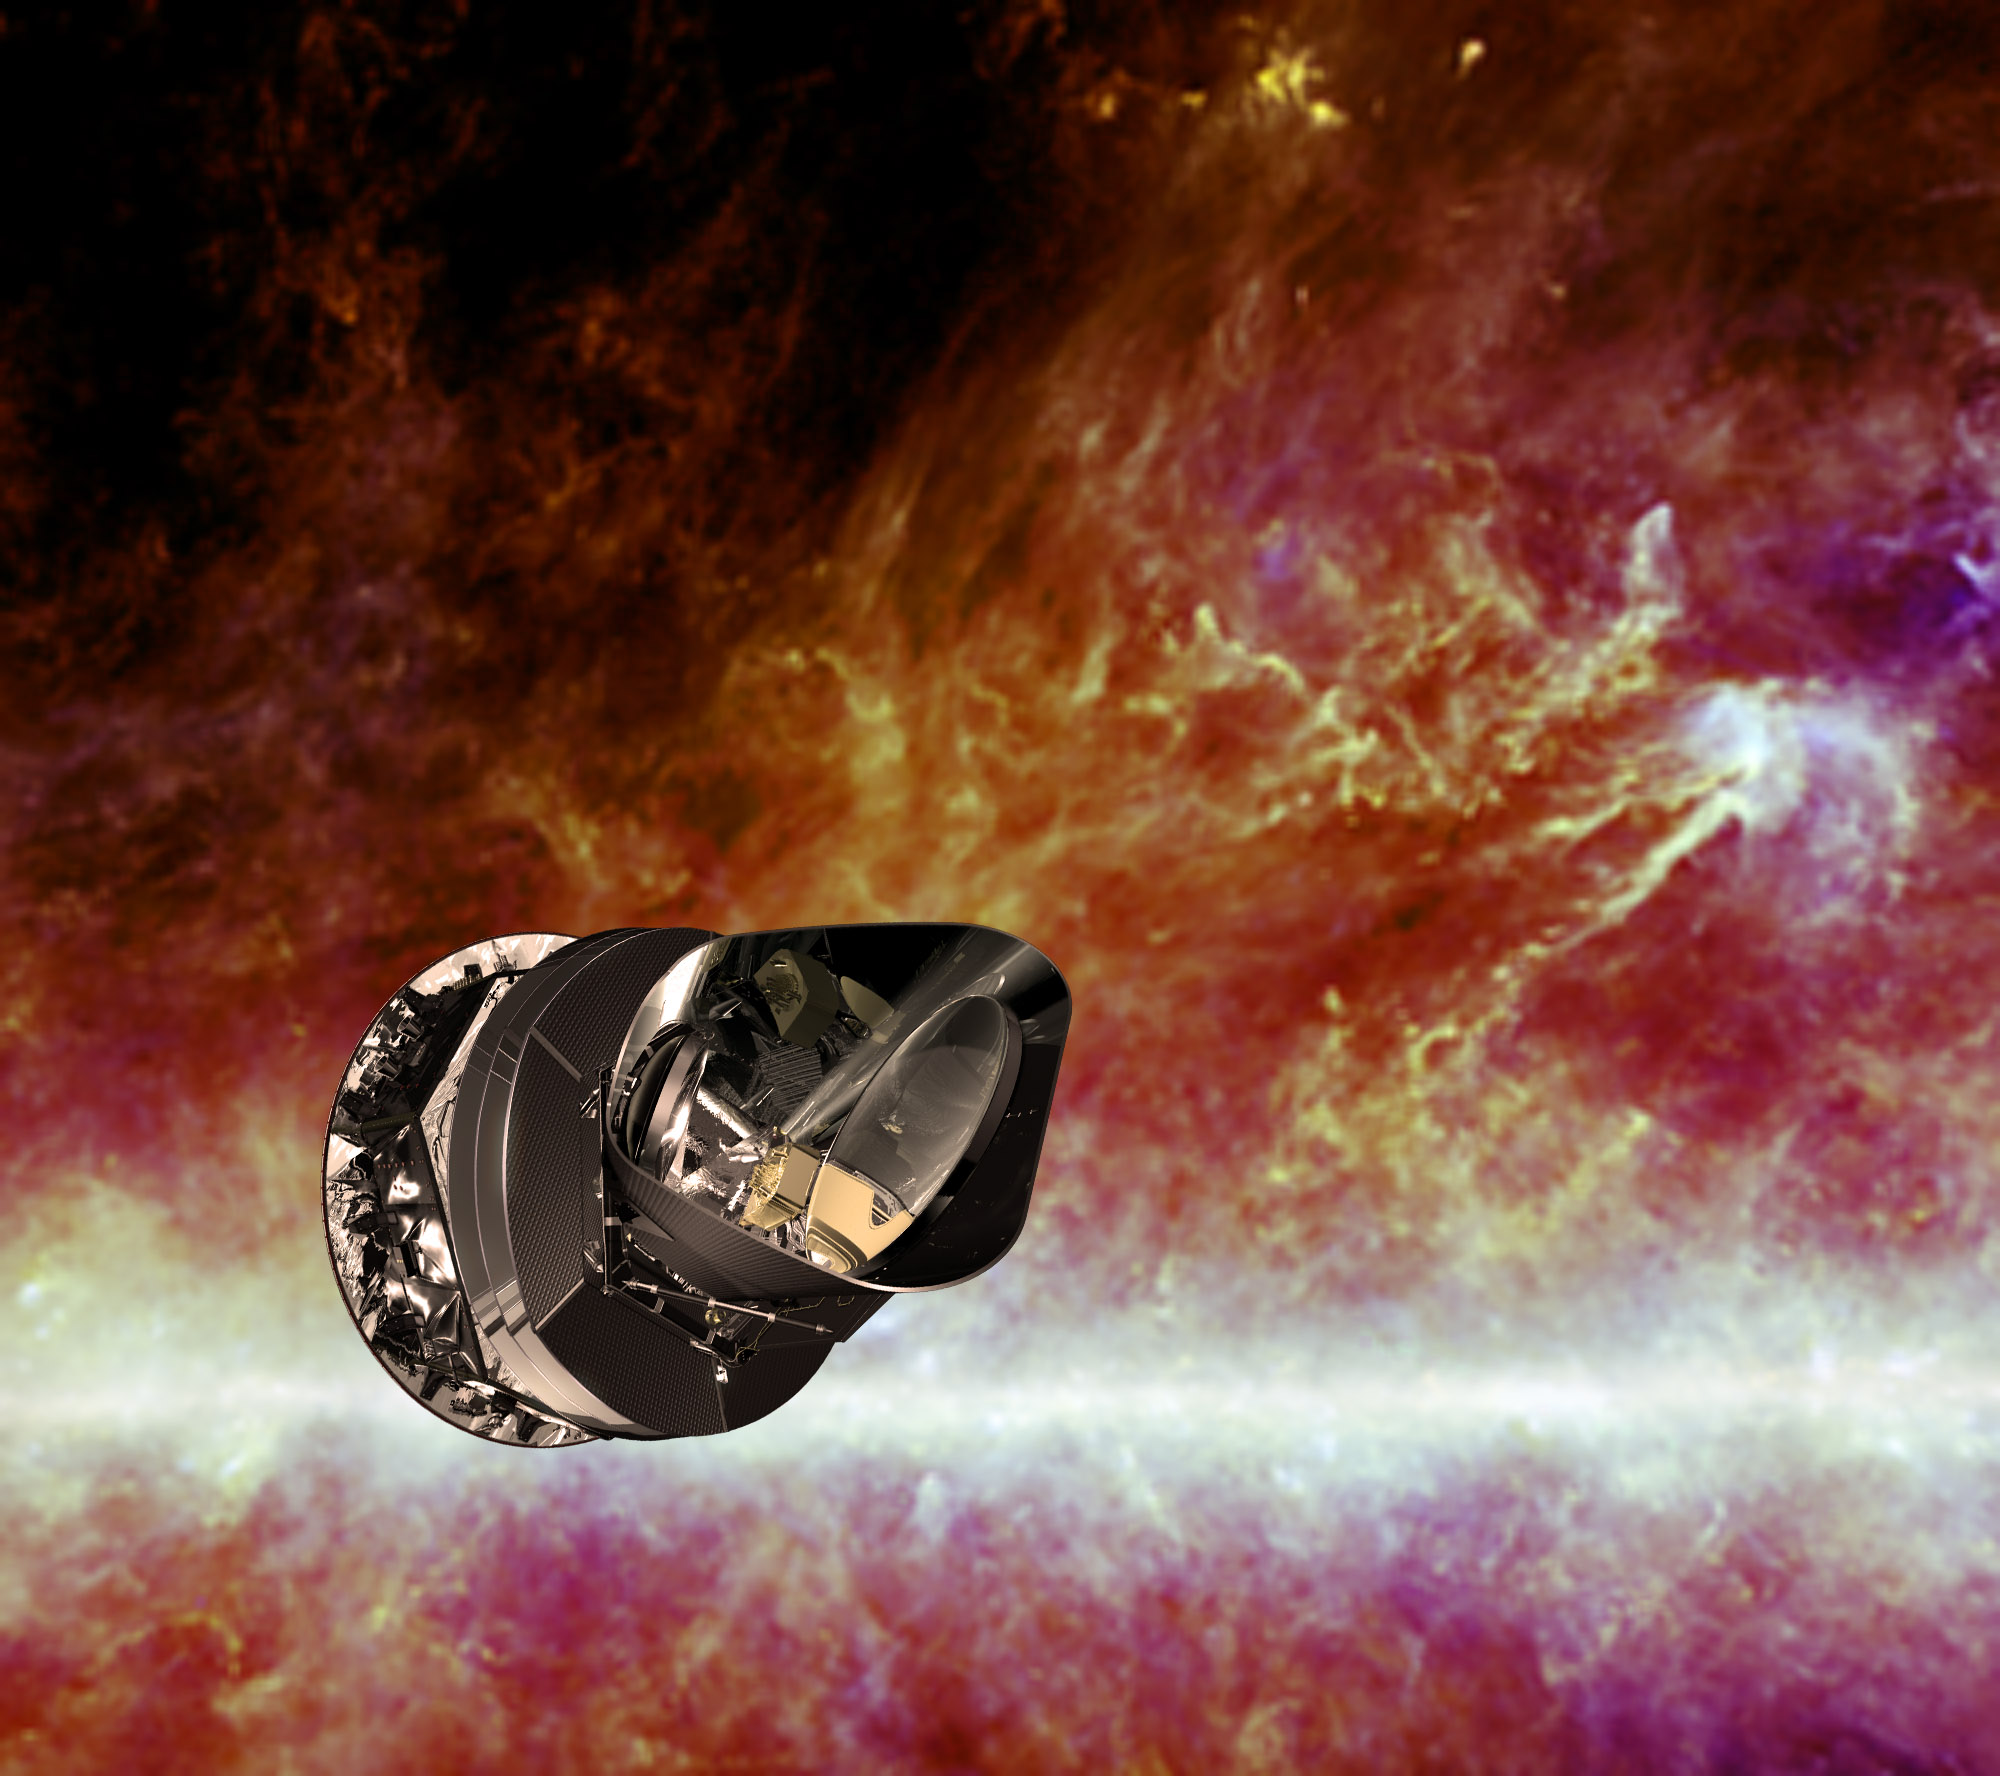 Artist s impression of the Planck spacecraft